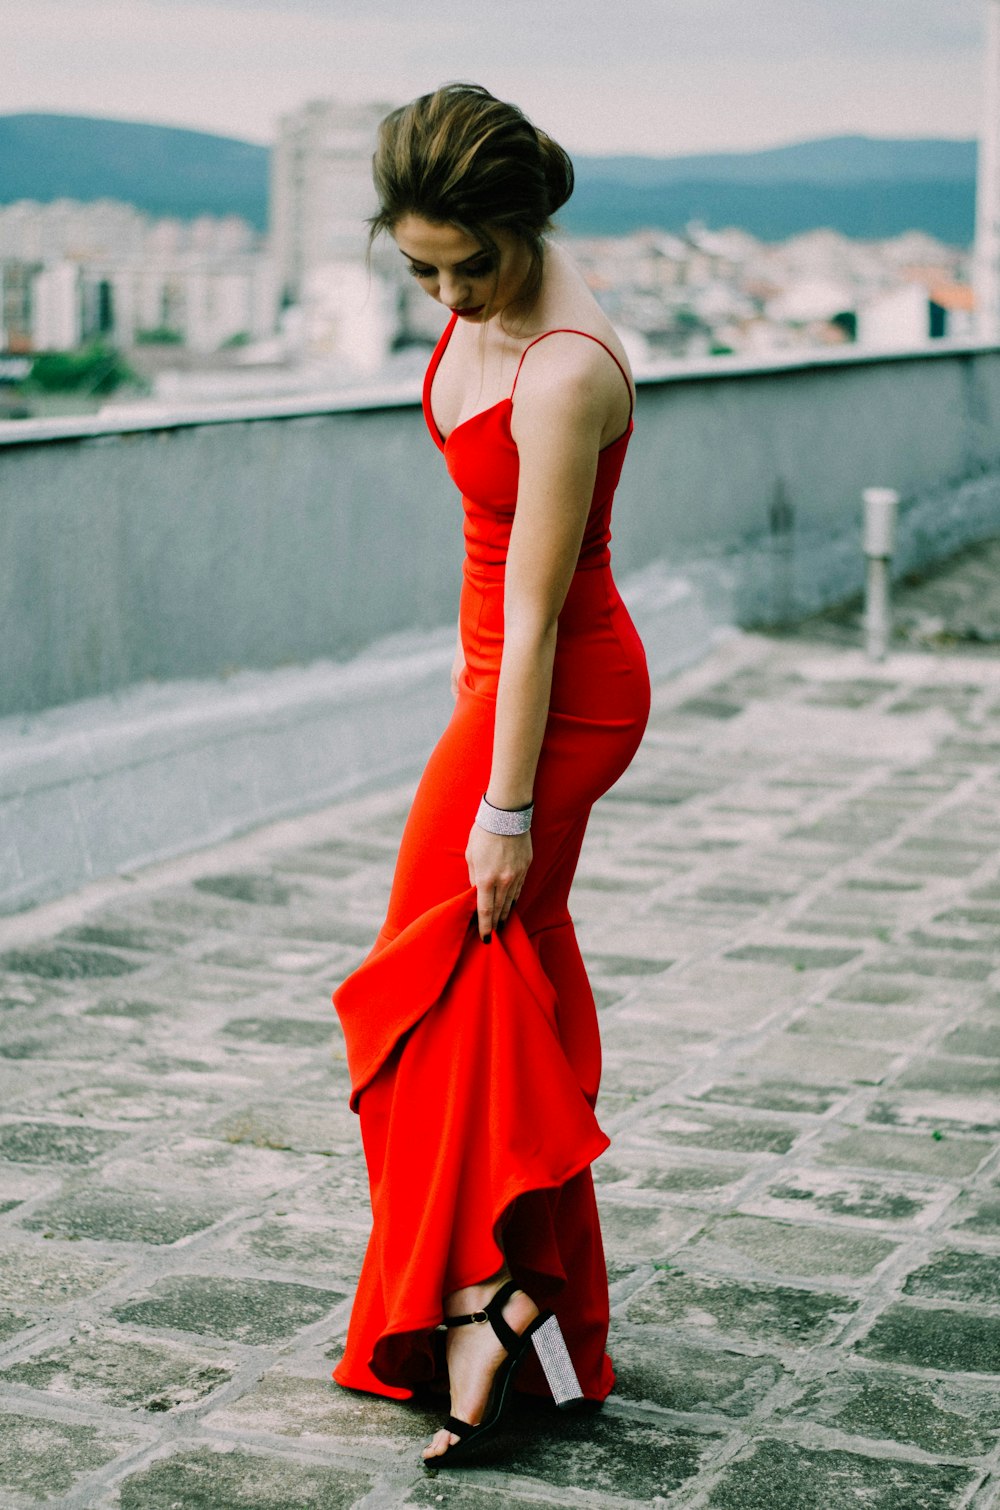 femme portant une robe rouge à bretelles spaghetti